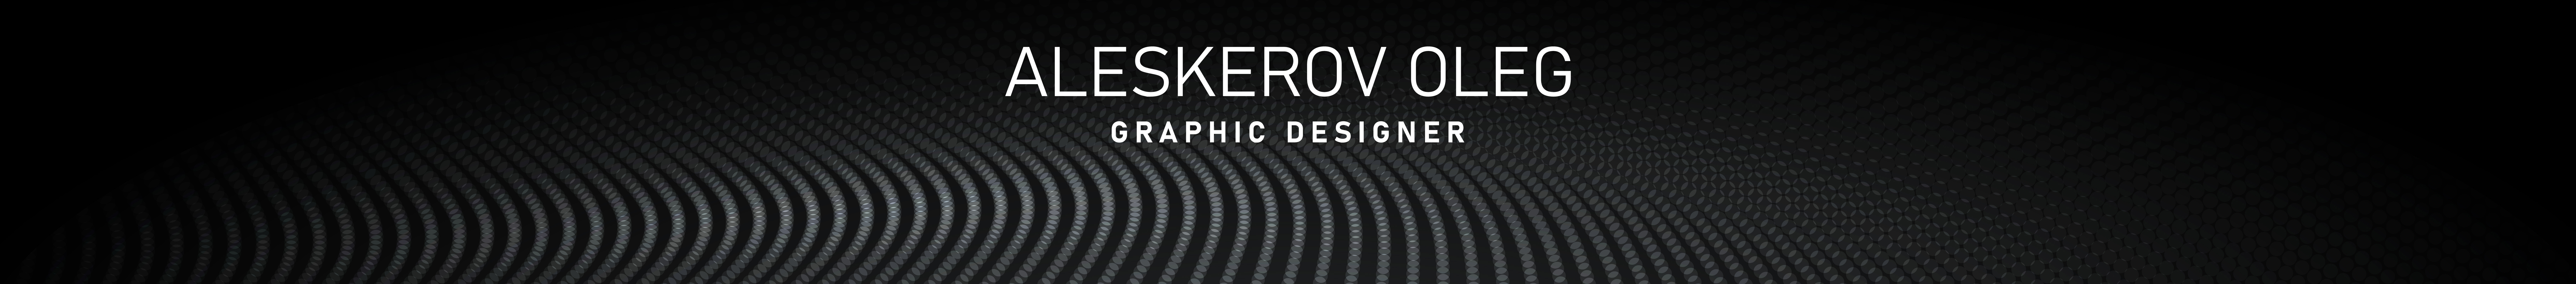 Oleg Aleskerov's profile banner